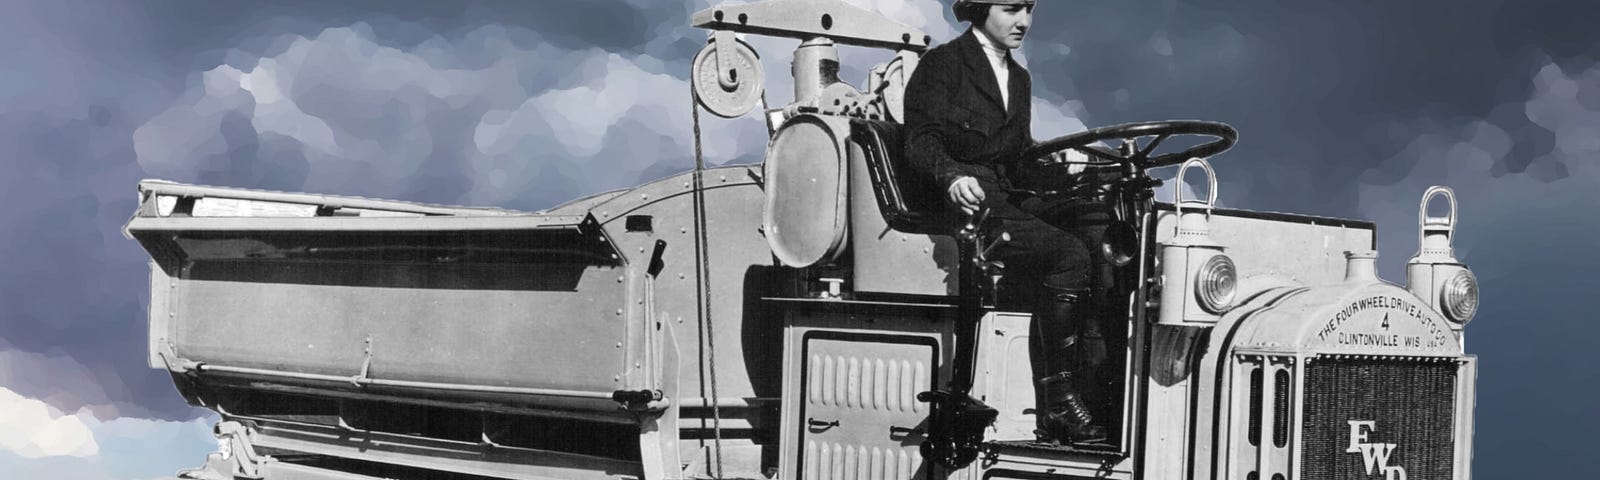 A young woman wearing a uniform, Luella Bates, drives a vintage truck.